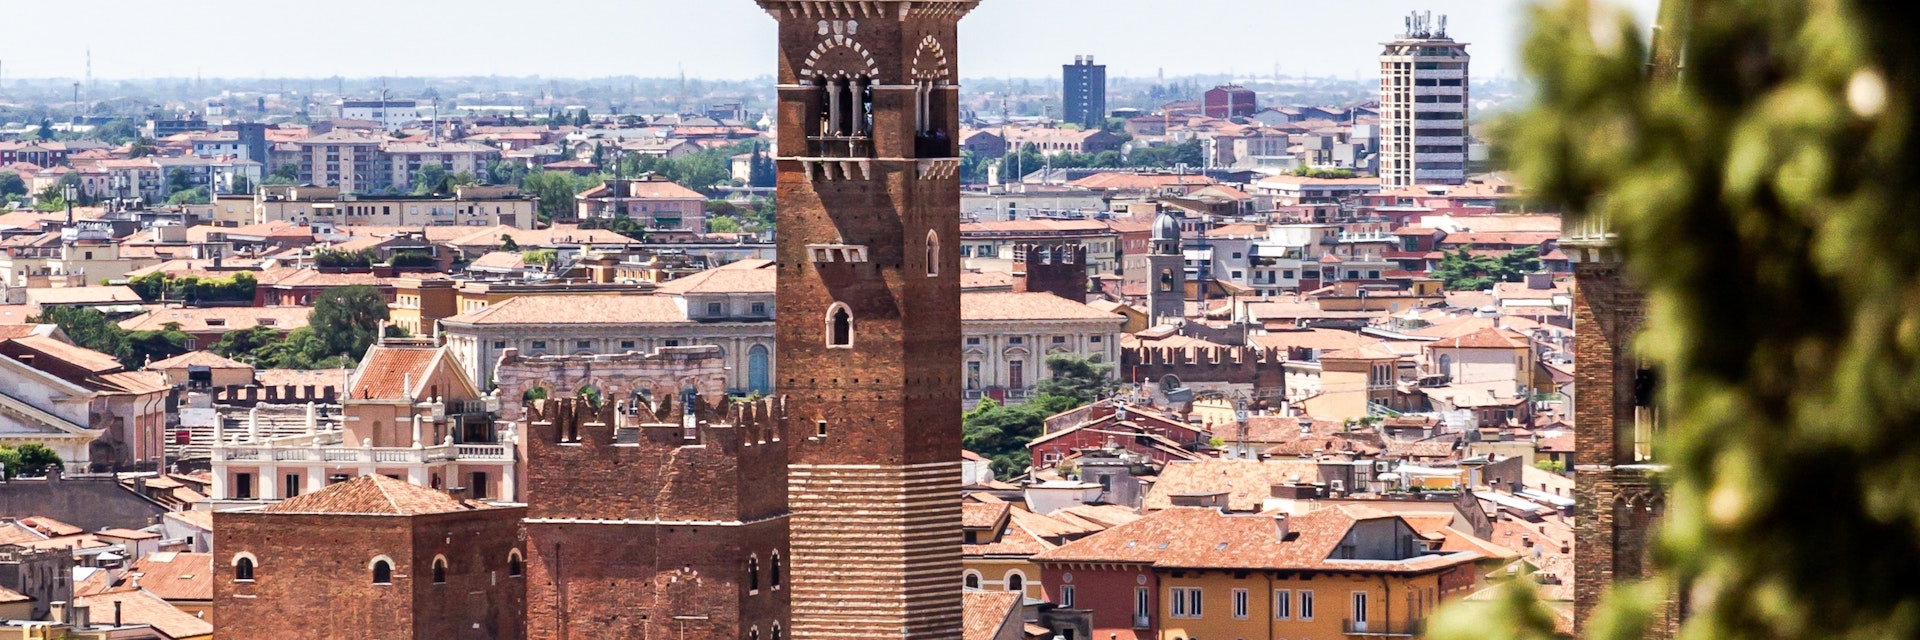 Verona skyline with a view of Torre dei Lamberti.